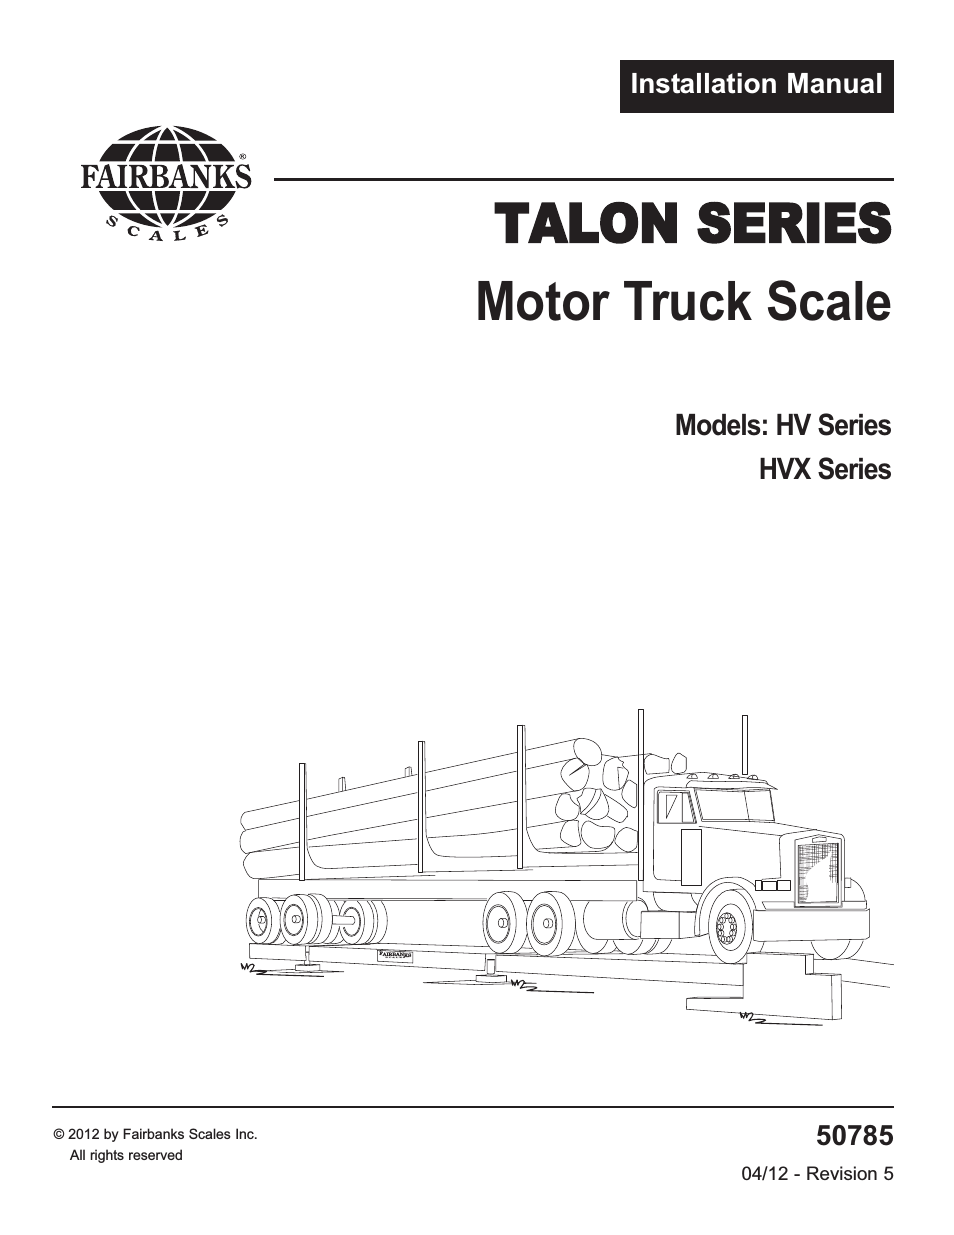 HV Series TALON SERIES Motor Truck Scale